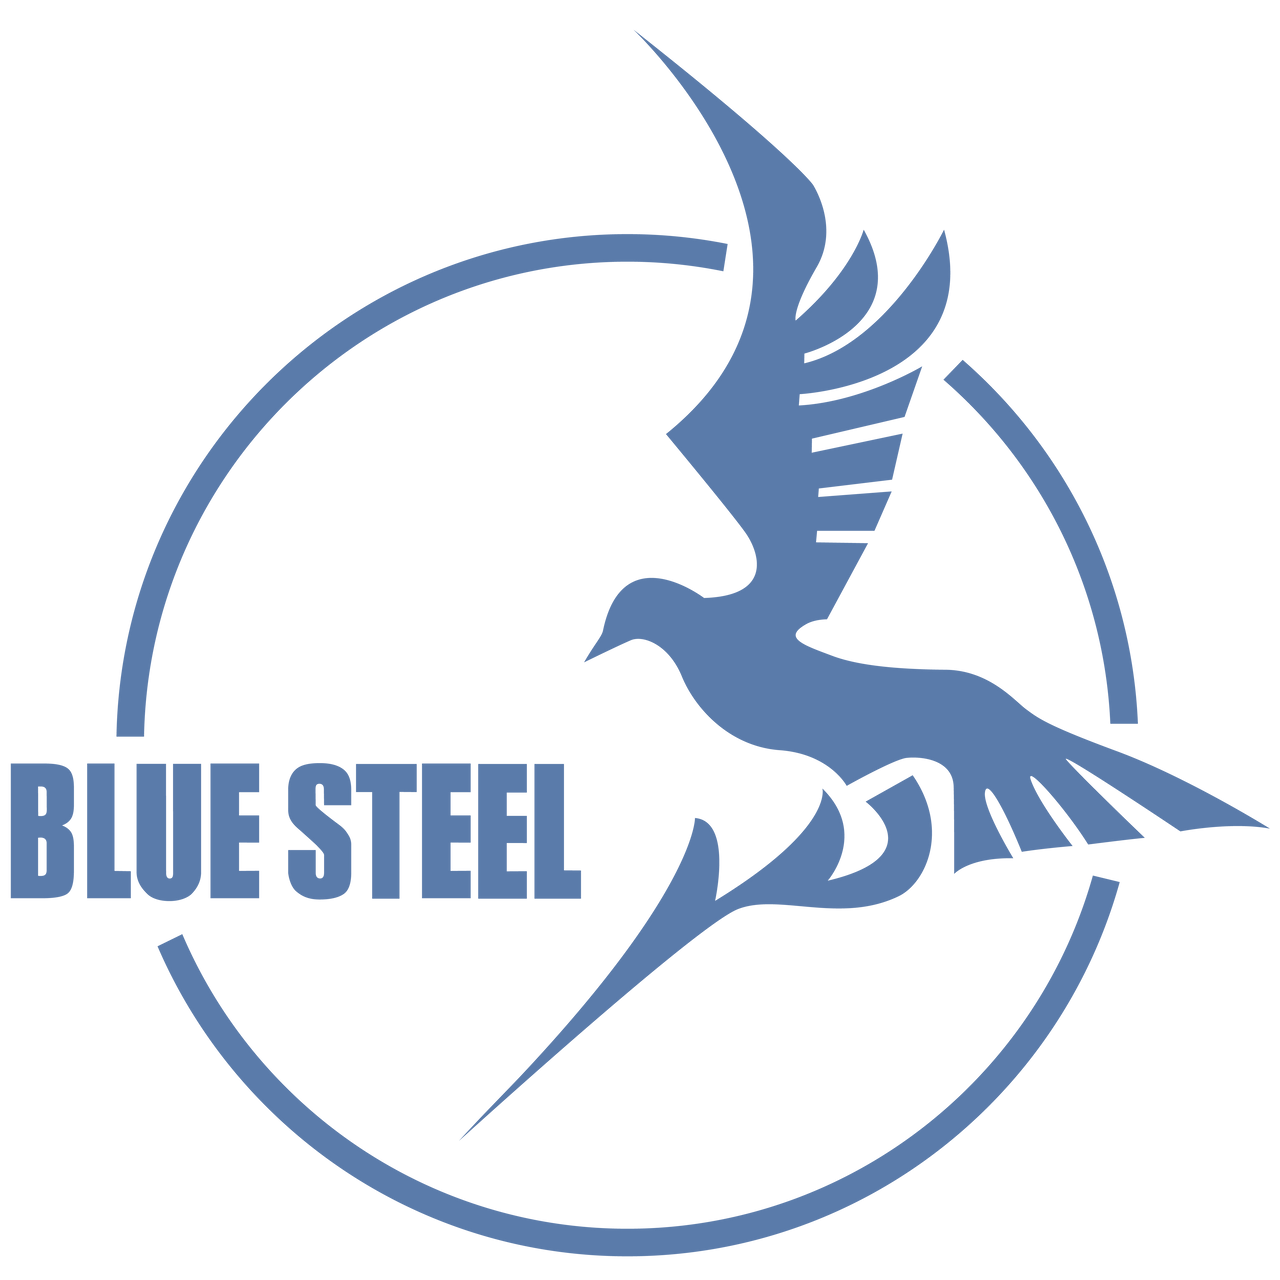 Arpeggio of Blue Steel logo vector